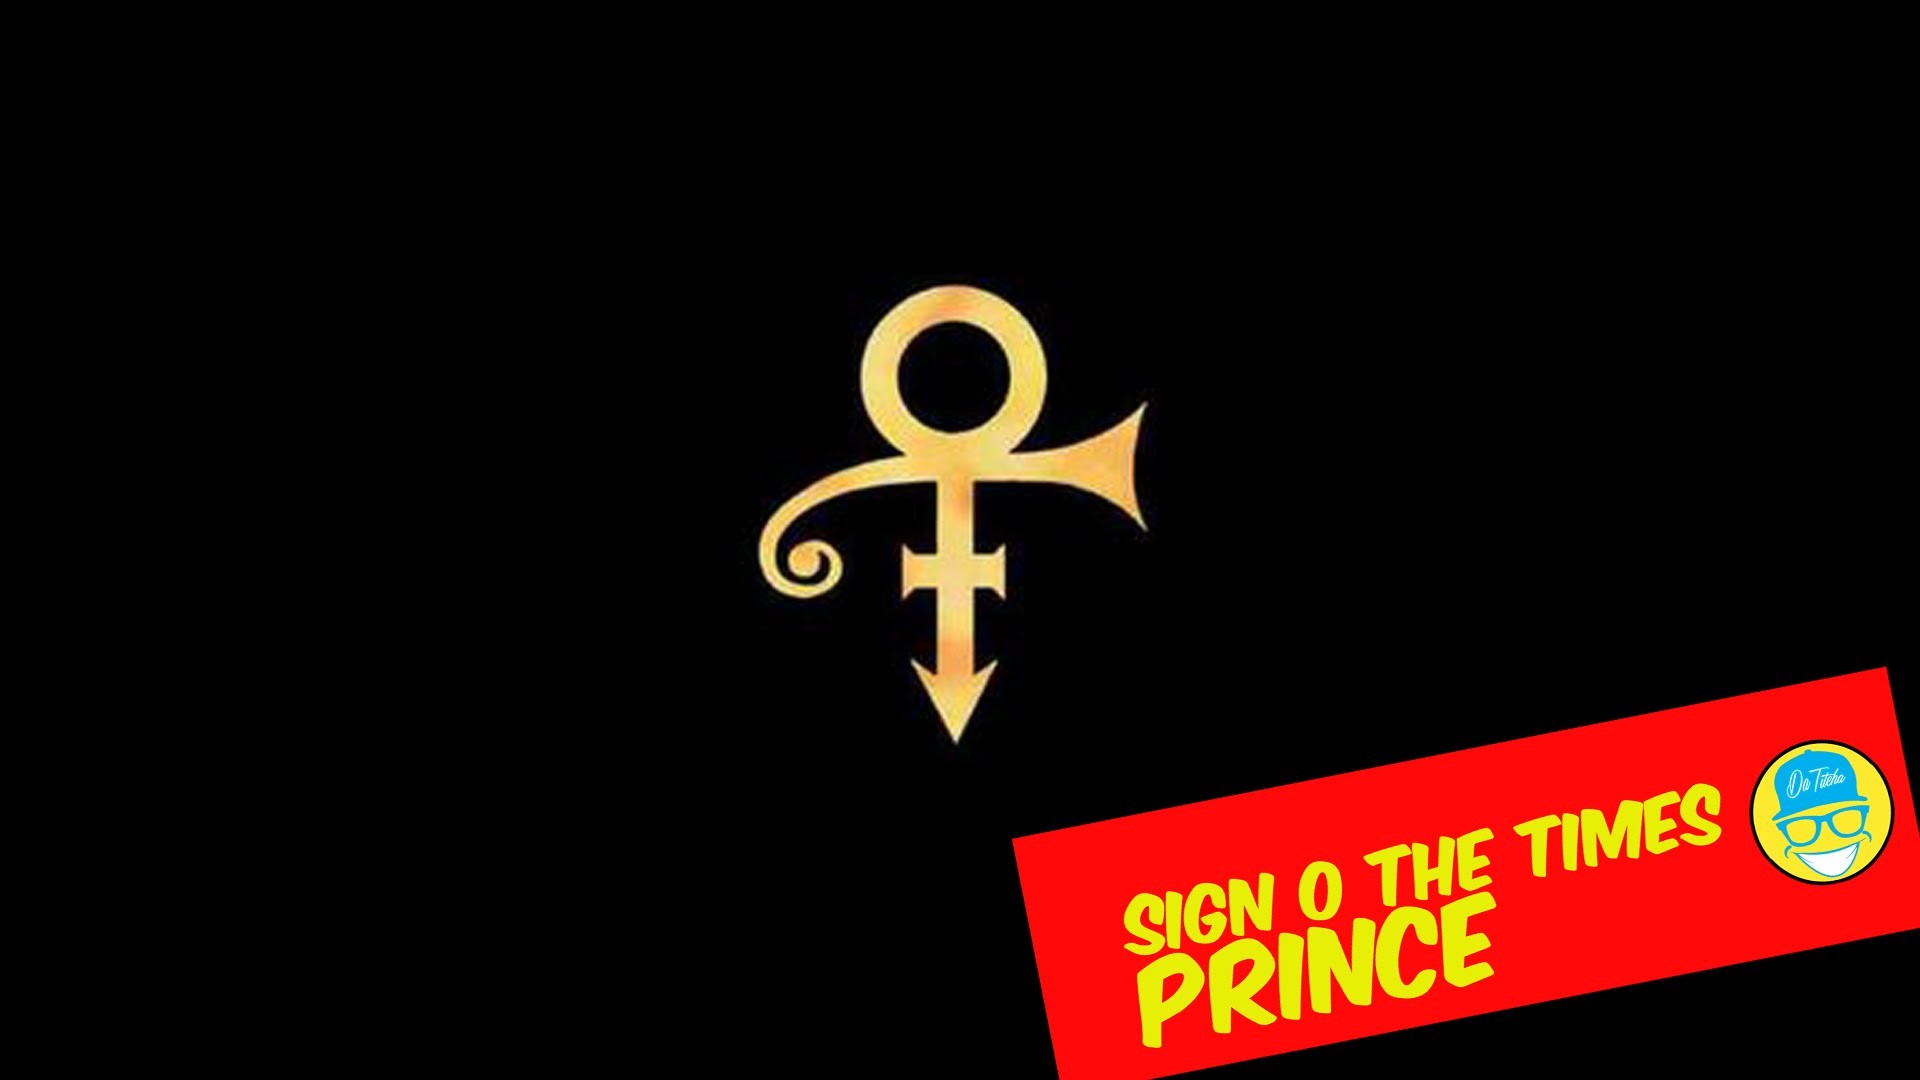 1920x1080 Prince - Sign o the times remix